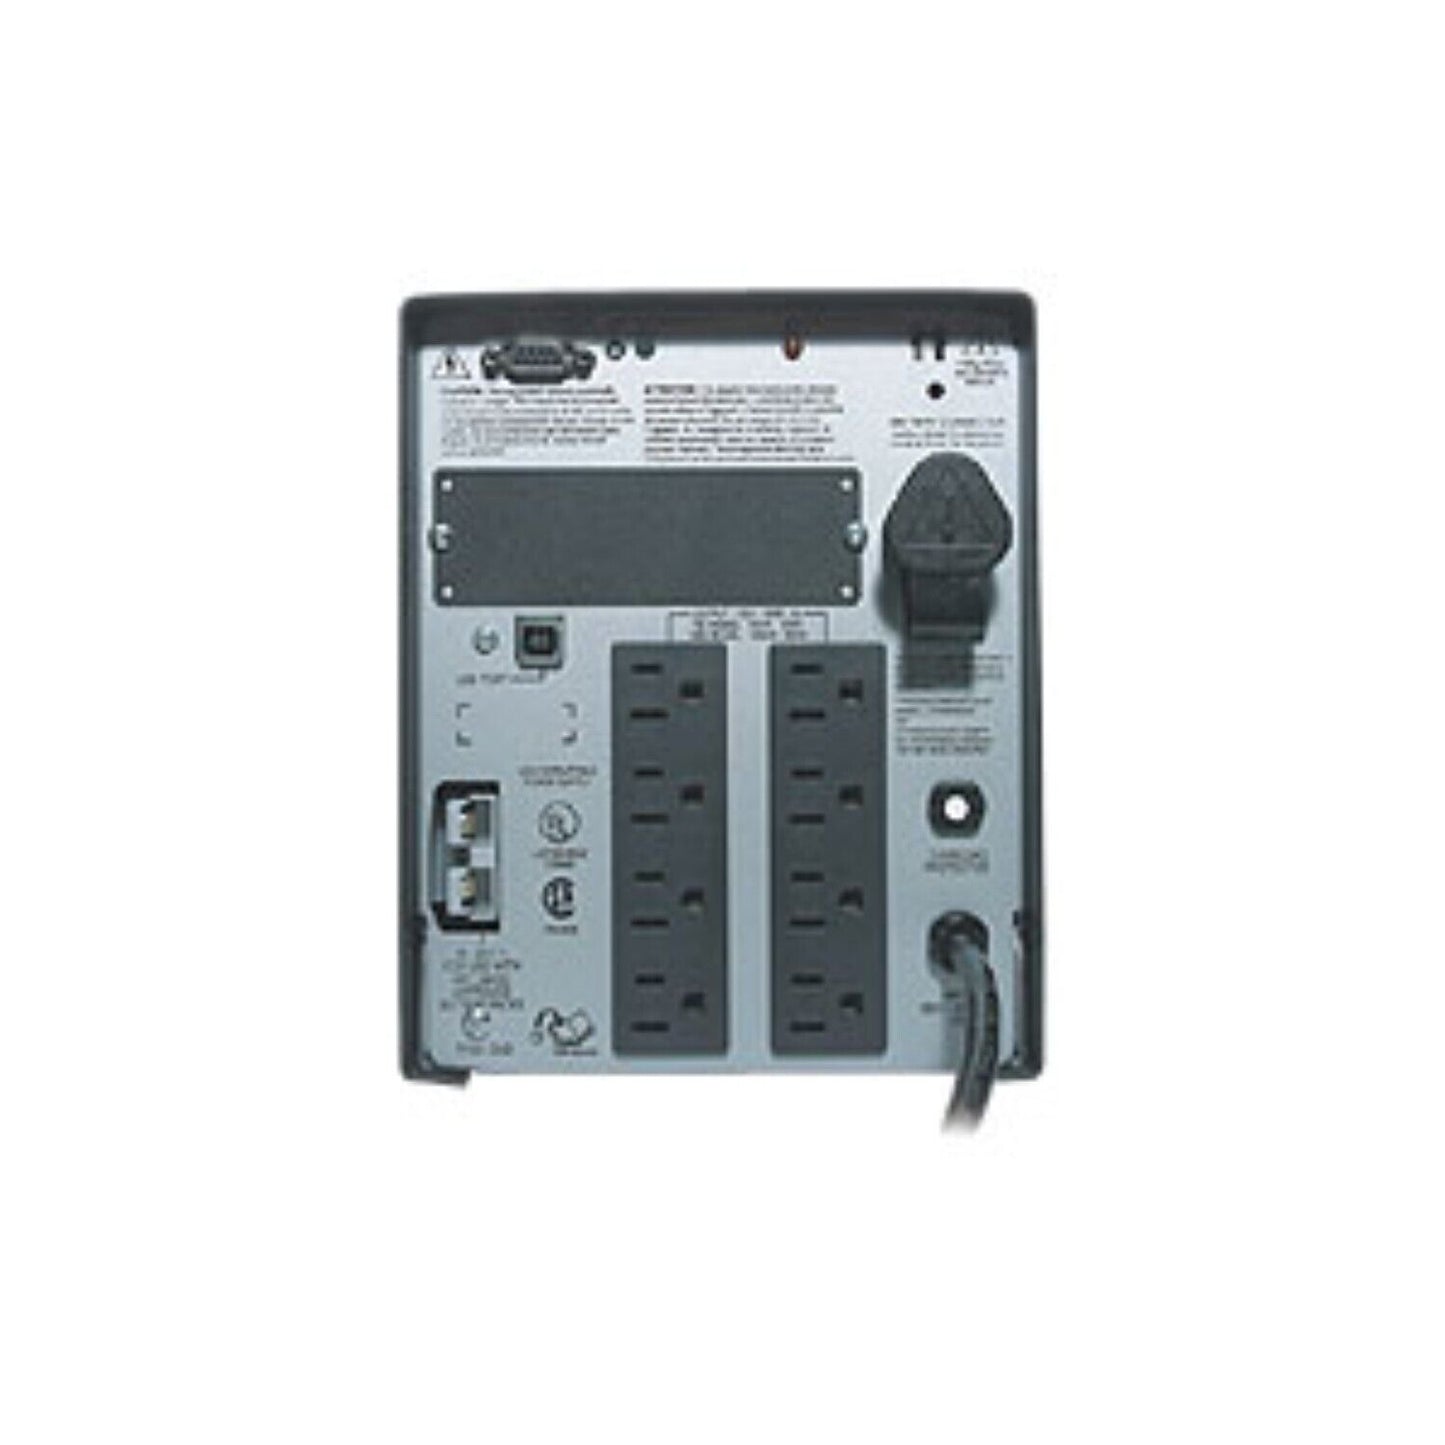 RBC7 UPS Complete Replacement Battery Kit for SUA1500 SUA1000XL SUA750XL VS1400